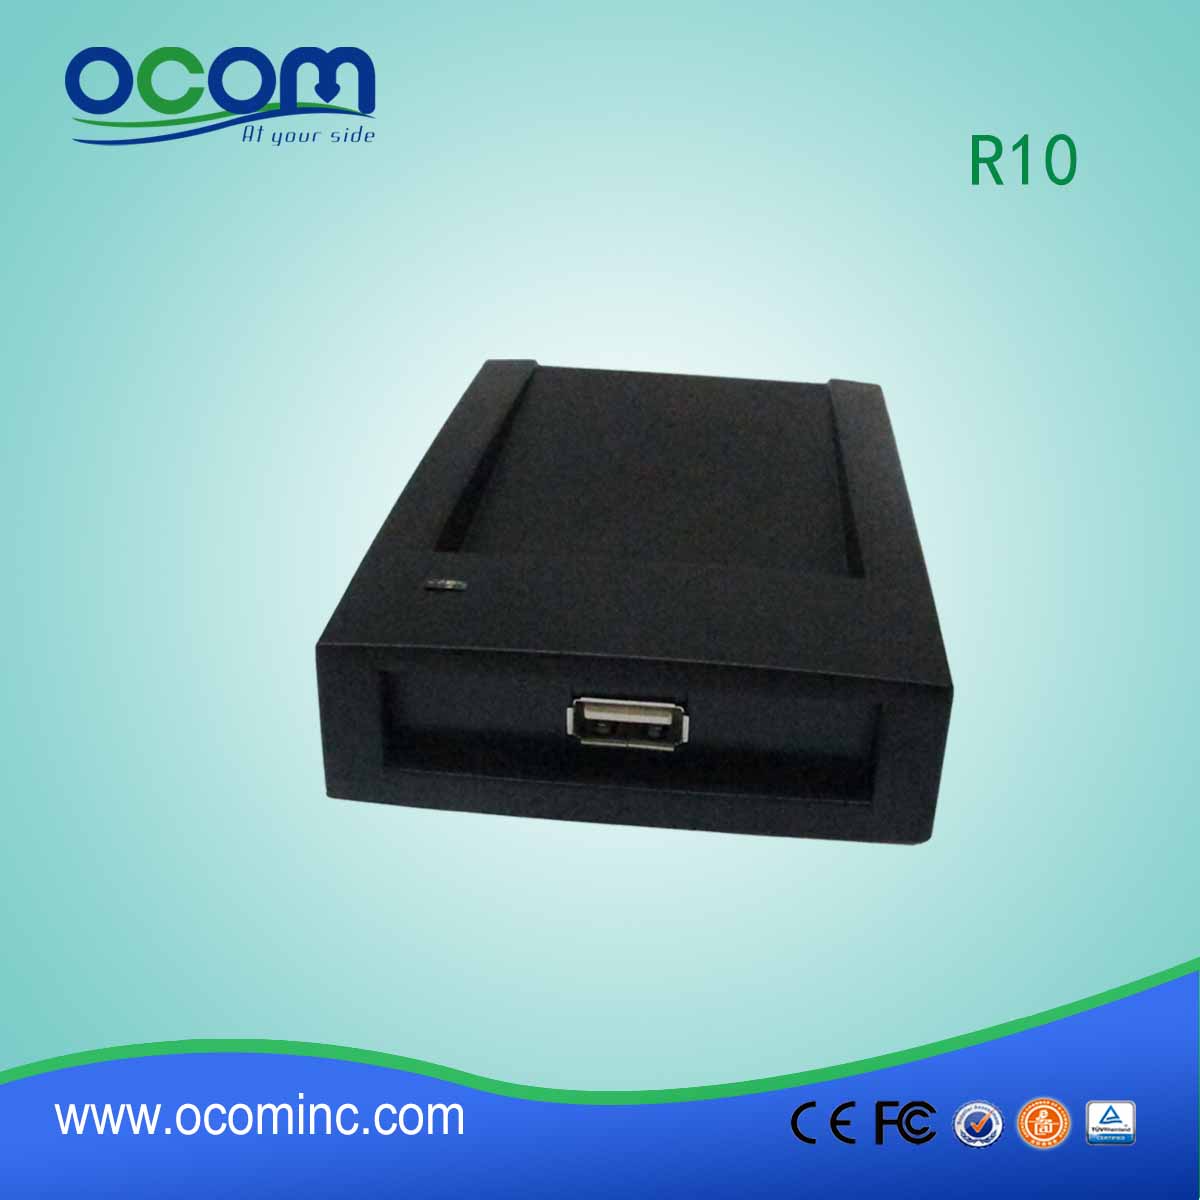 OCOM-R10 قارئ بطاقة RFID USB التوصيل والتشغيل ل 125 KHZ / 13.56MHZ